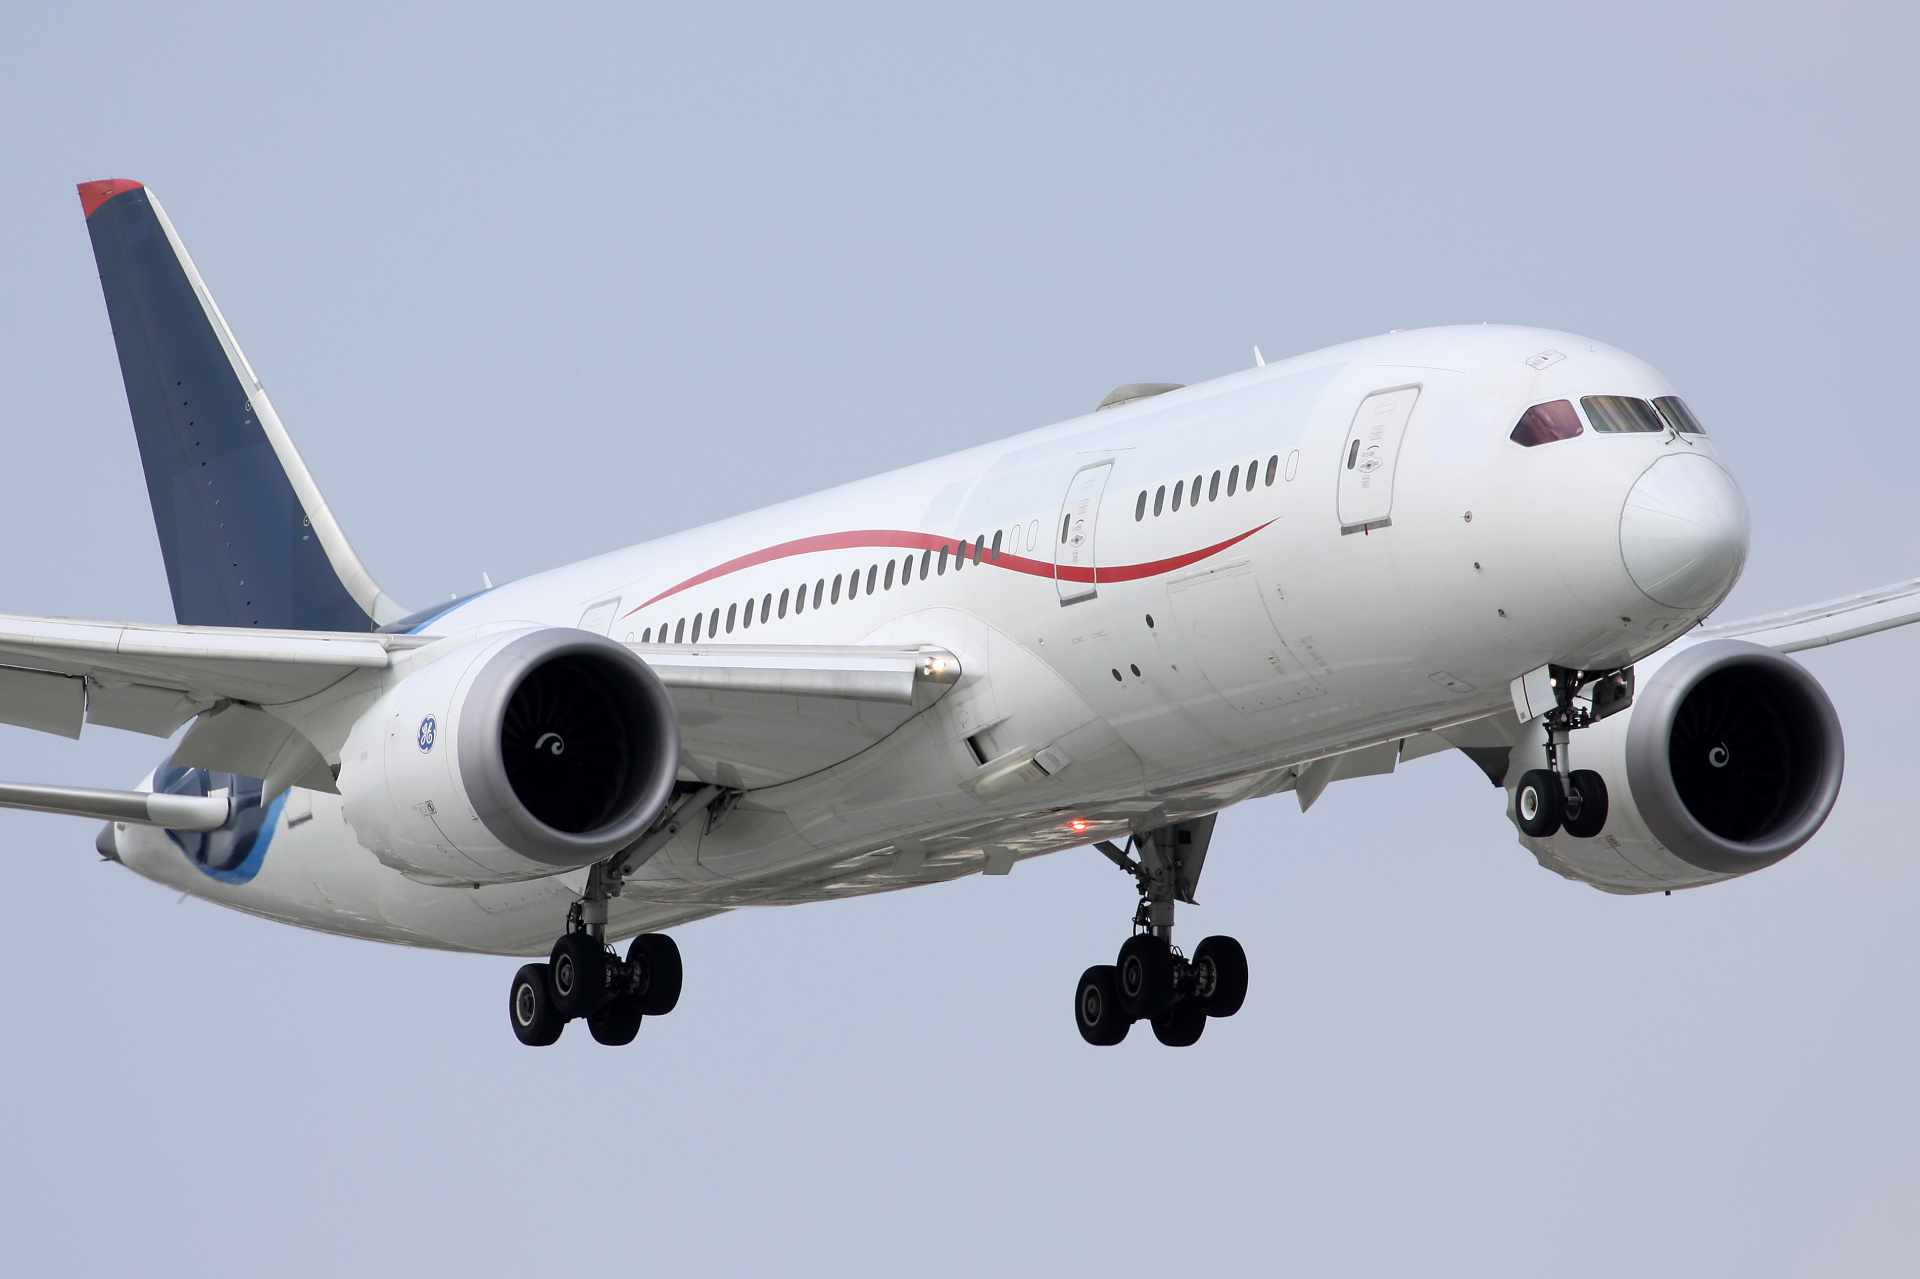 P4-787 (Aircraft » EPWA Spotting » Boeing 787-8 Dreamliner » Comlux Aruba)